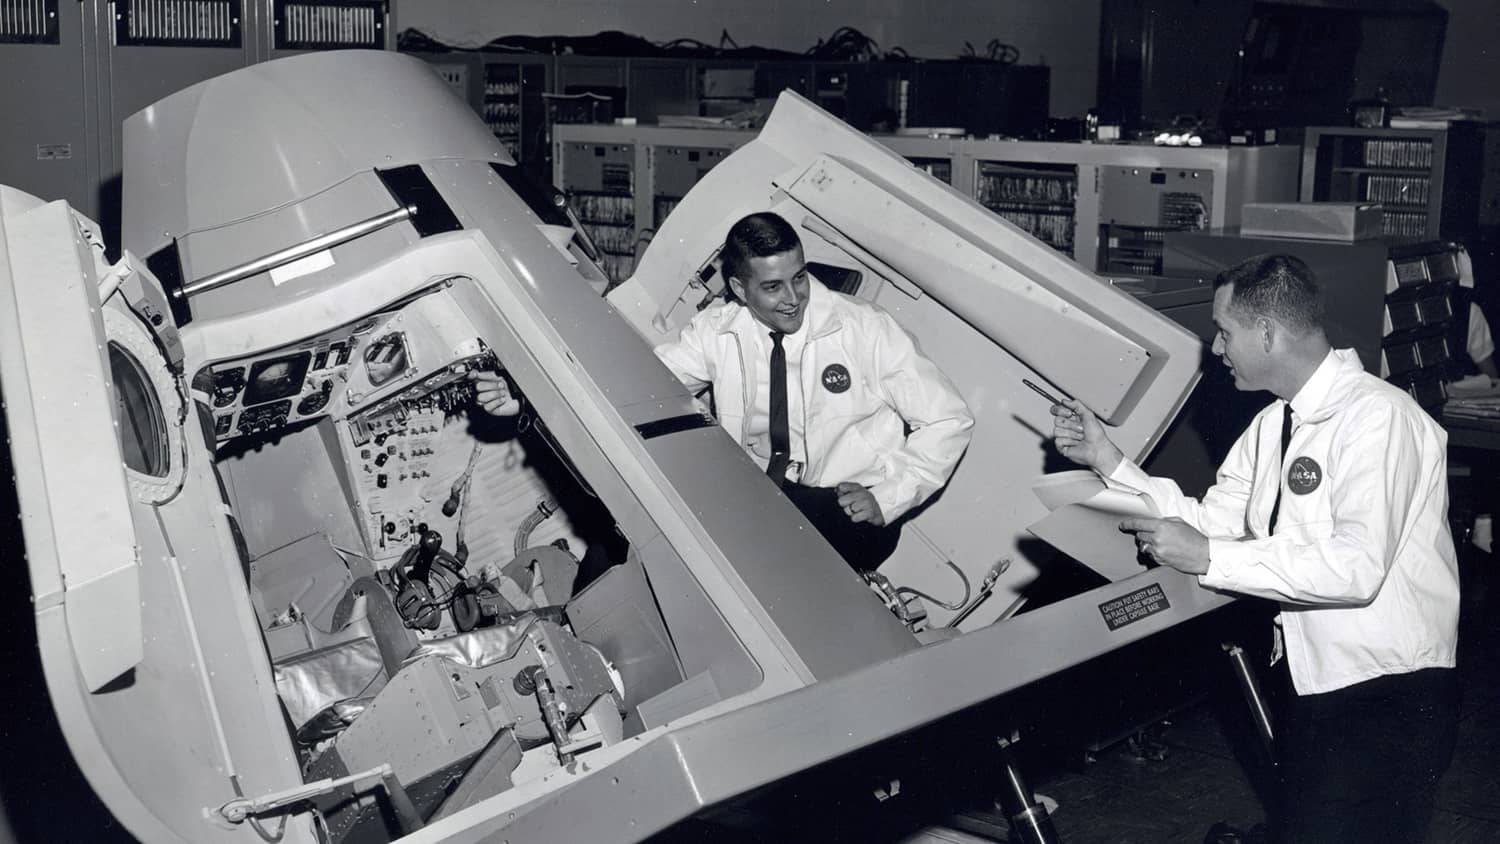 Jim Prim and George Prude pose in the Gemini Trainer used in the Apollo 11 mission.